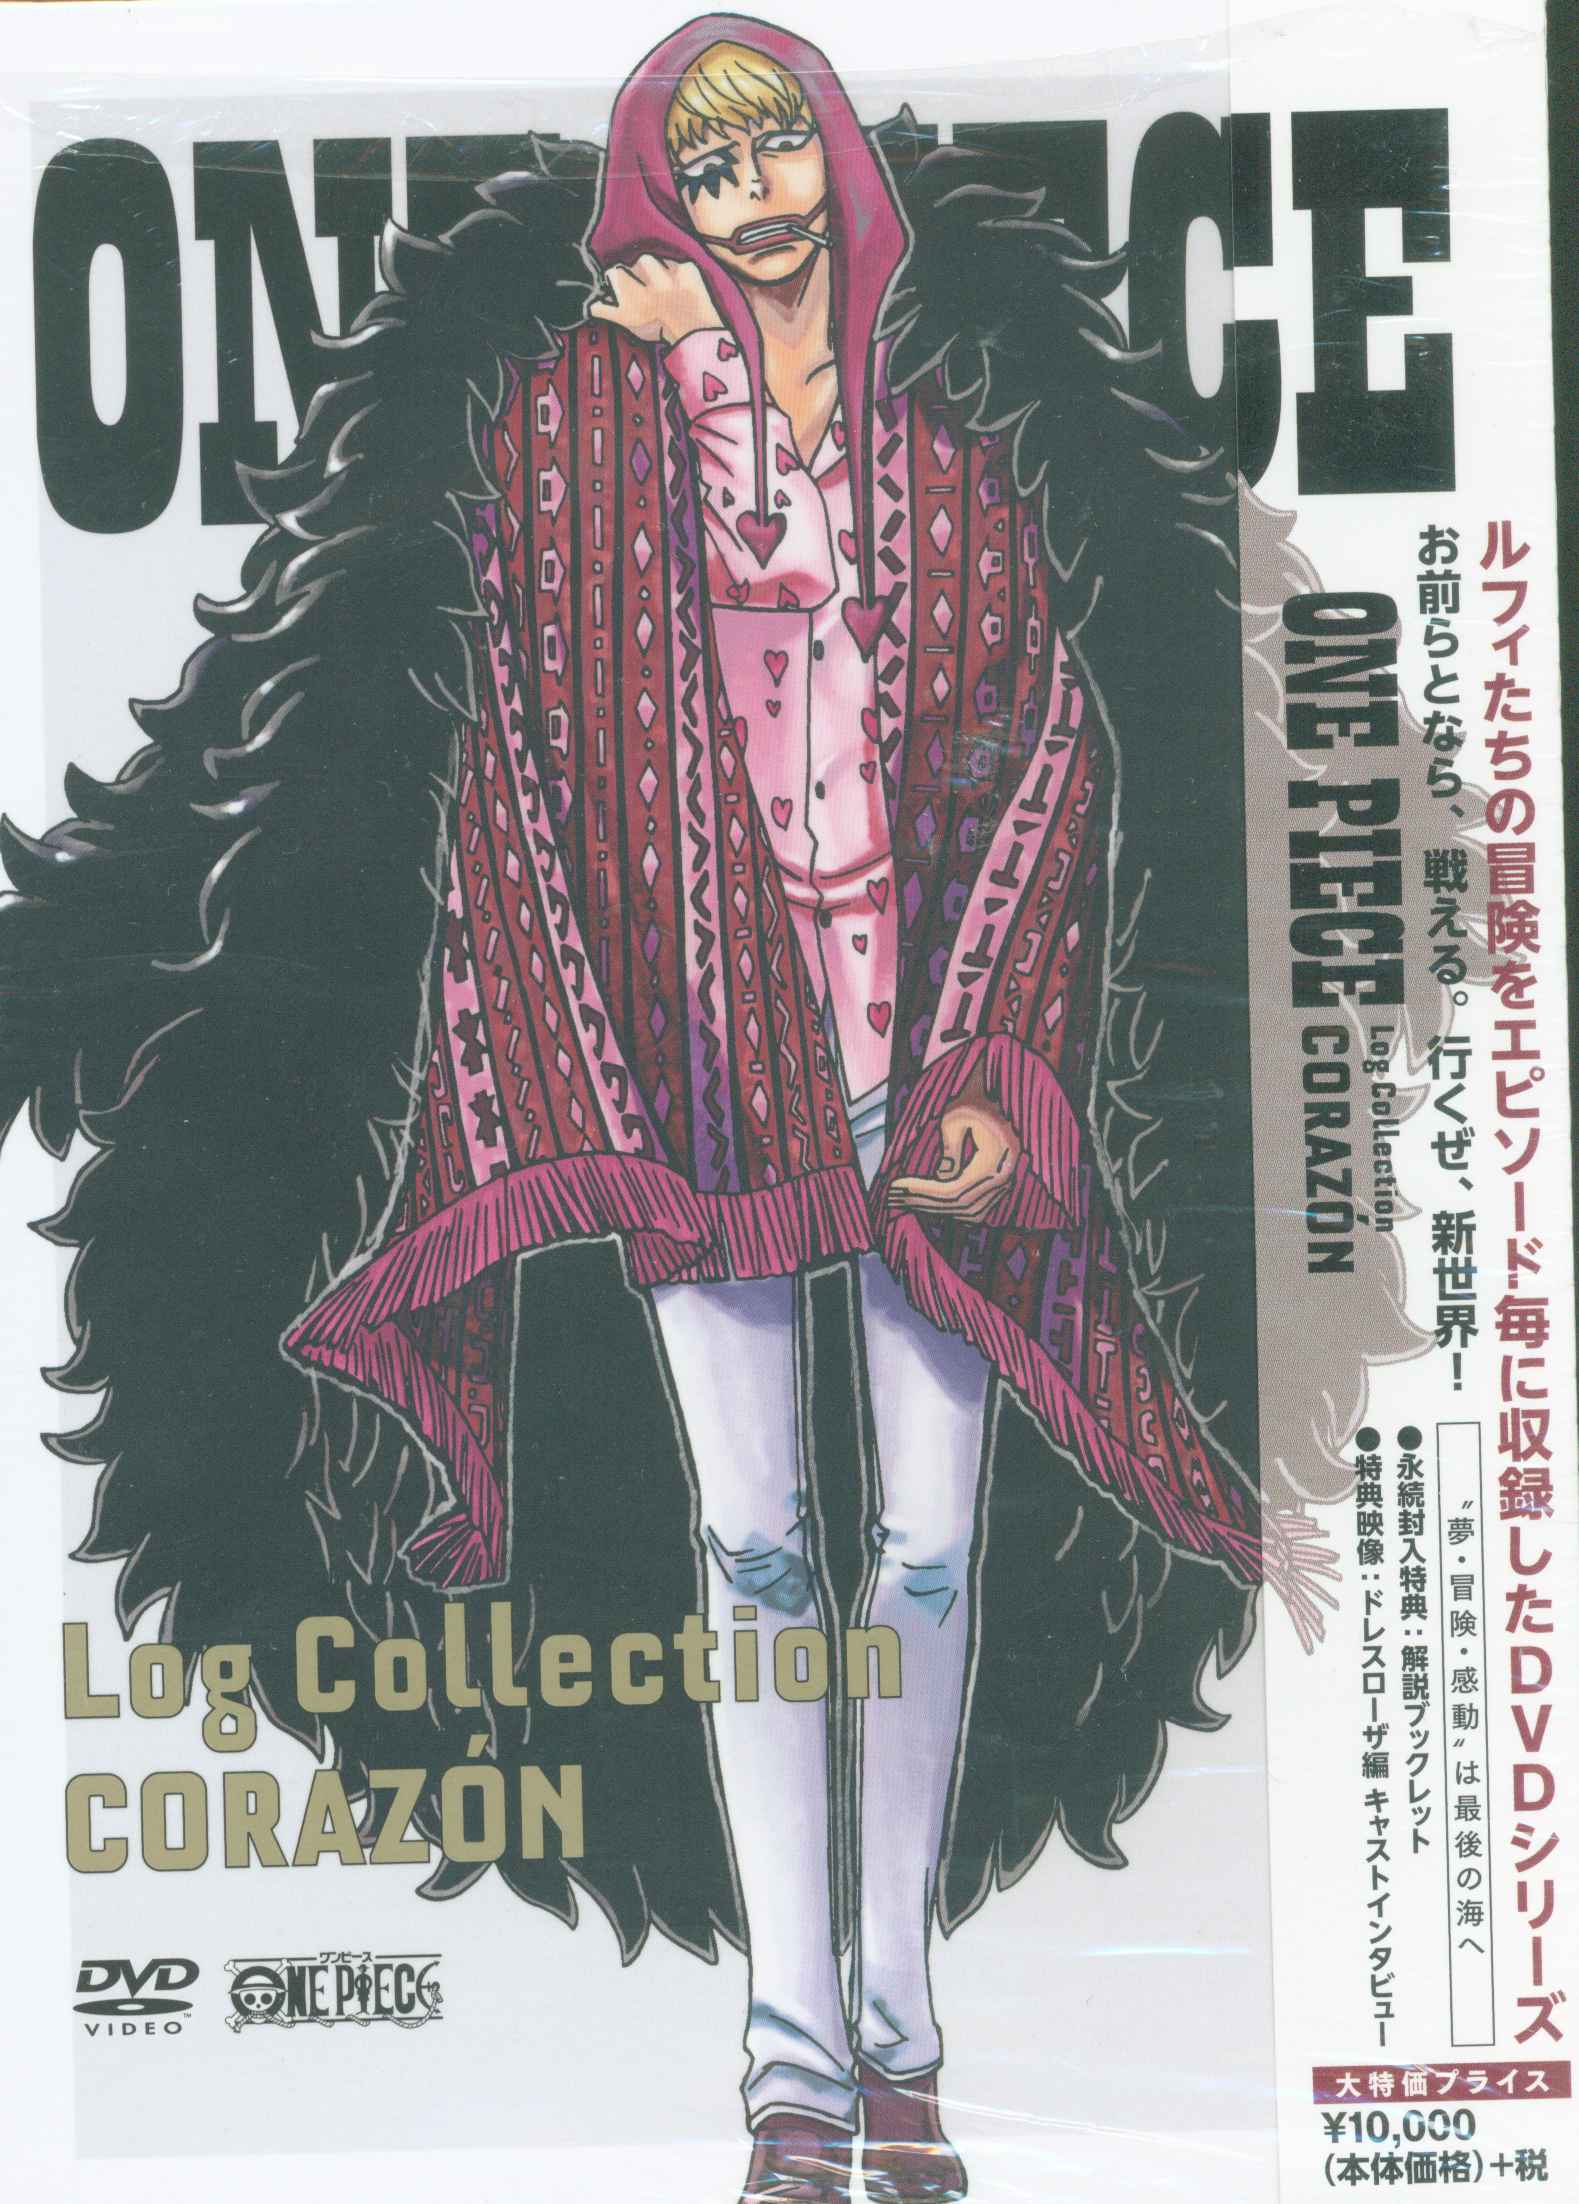 Anime DVD ONE PIECE Log Collection CORAZON | MANDARAKE 在线商店